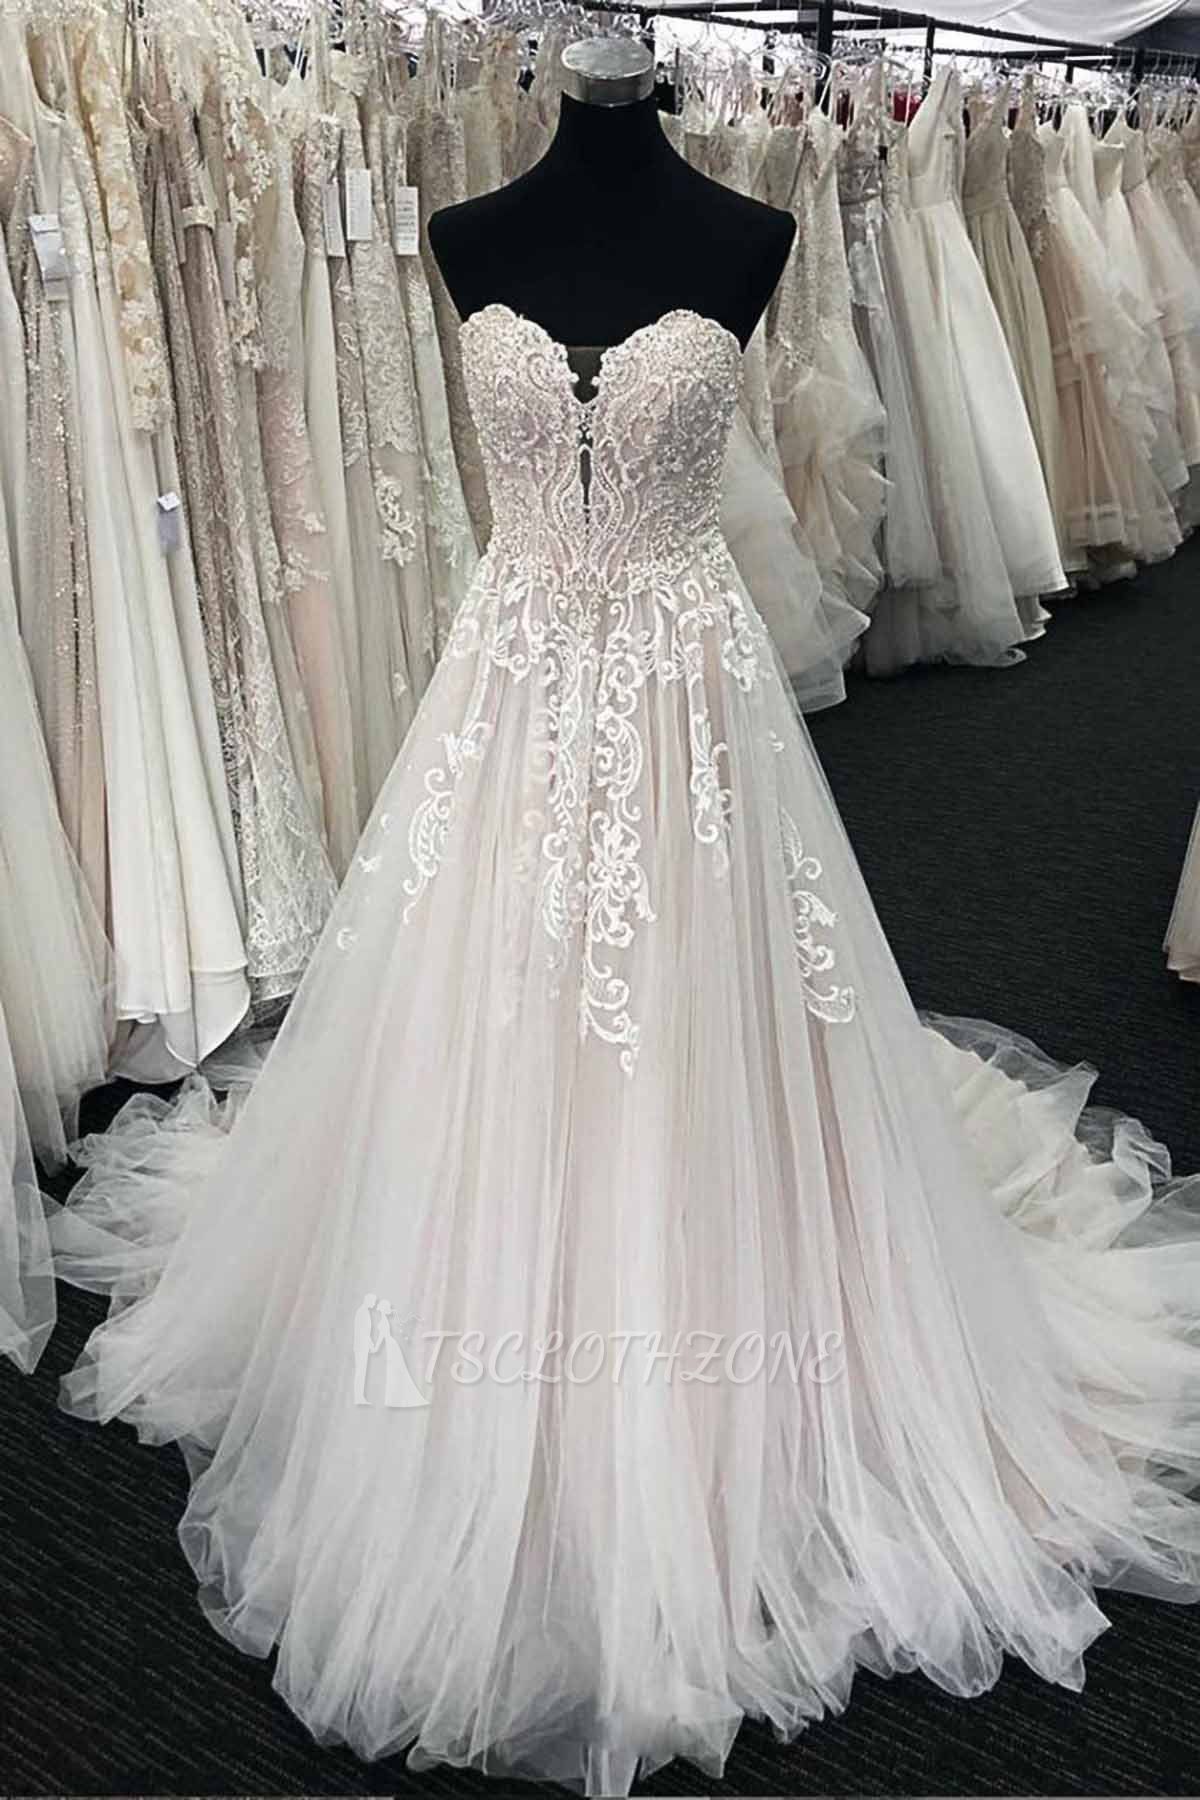 TsClothzone Chic Unique White Lace Long White Wedding Dress Sweetheart Appliques Brautkleider im Angebot